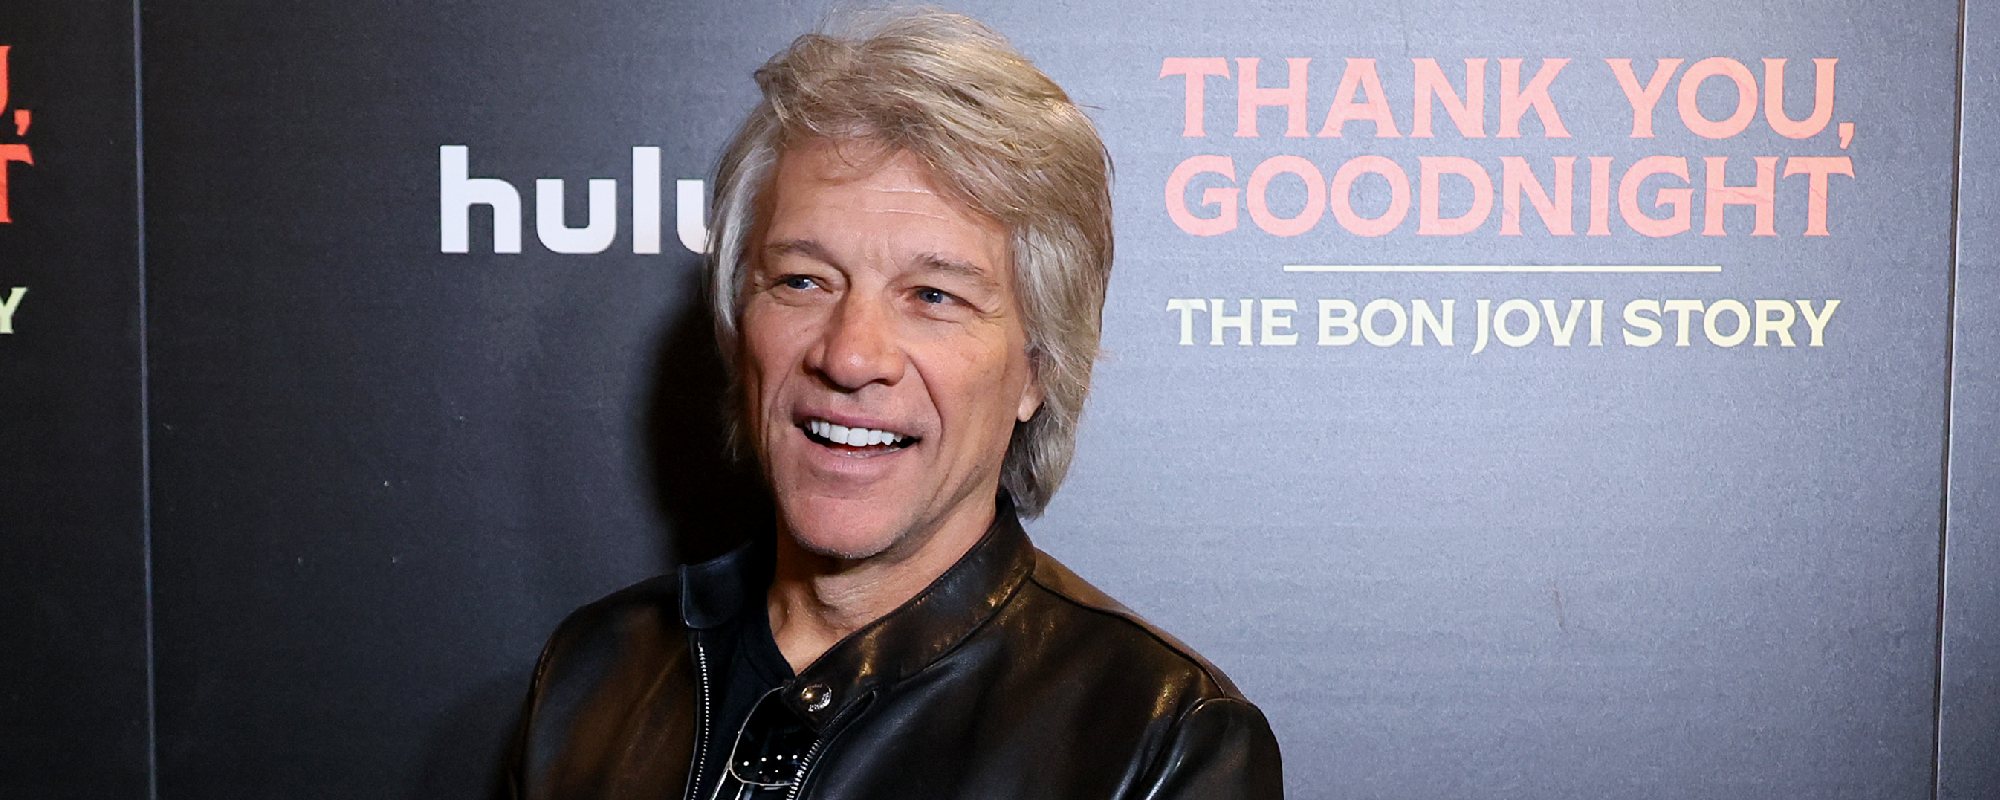 Jon Bon Jovi Discusses His Chances of Working With Richie Sambora Again